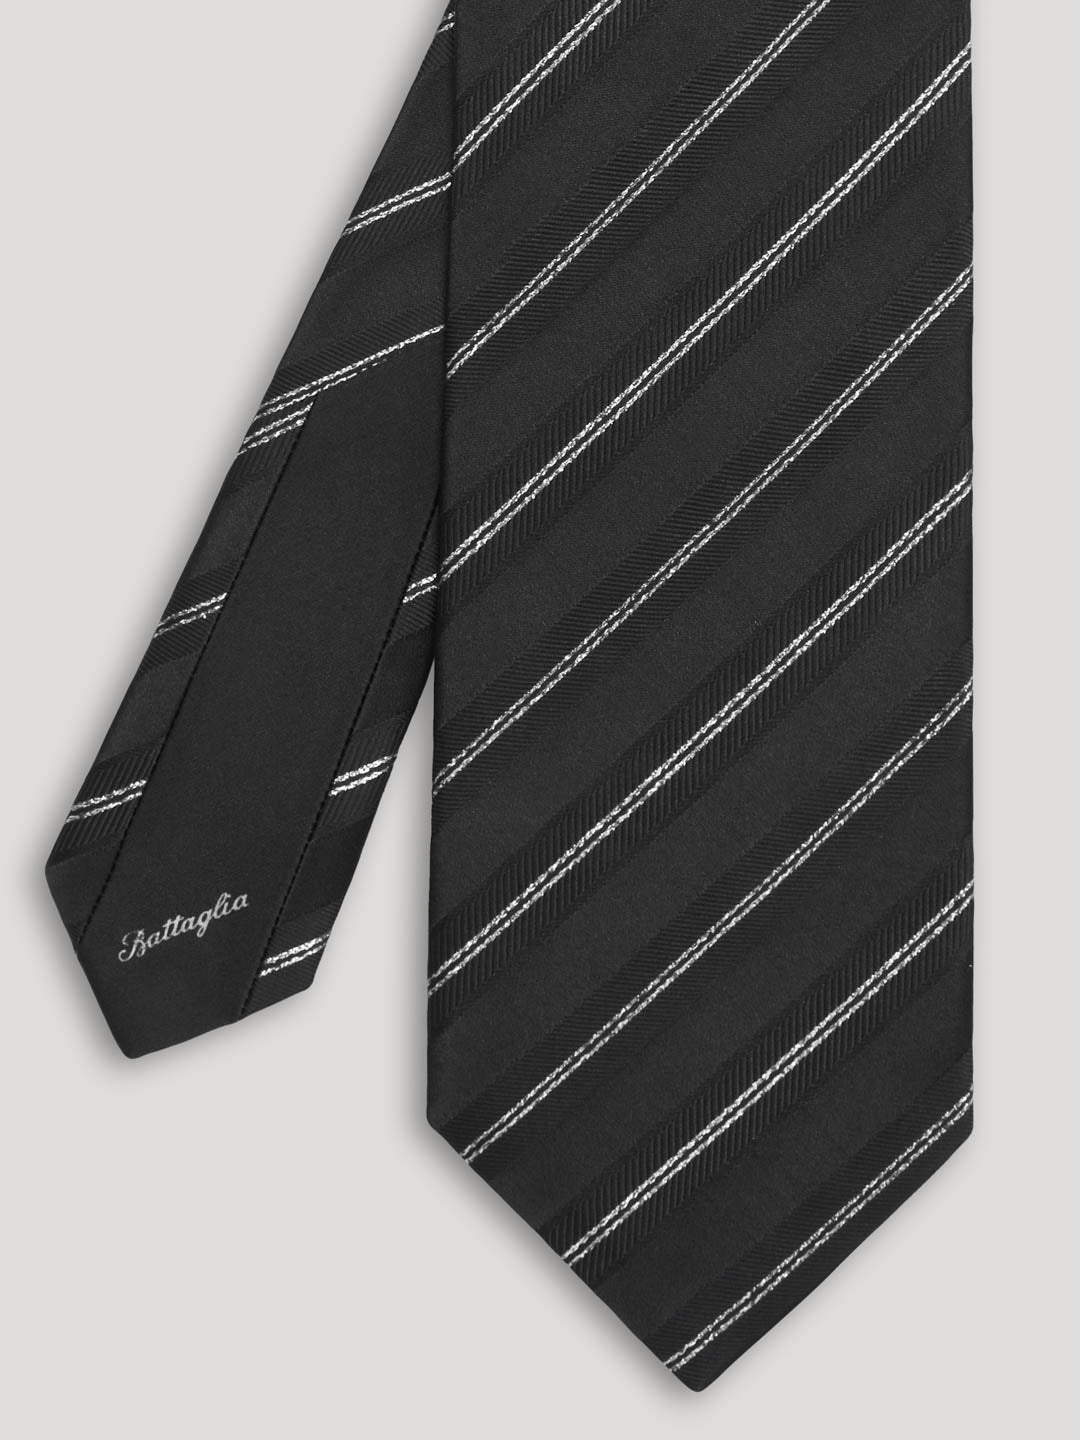 Black silk tie with silver stripes. 